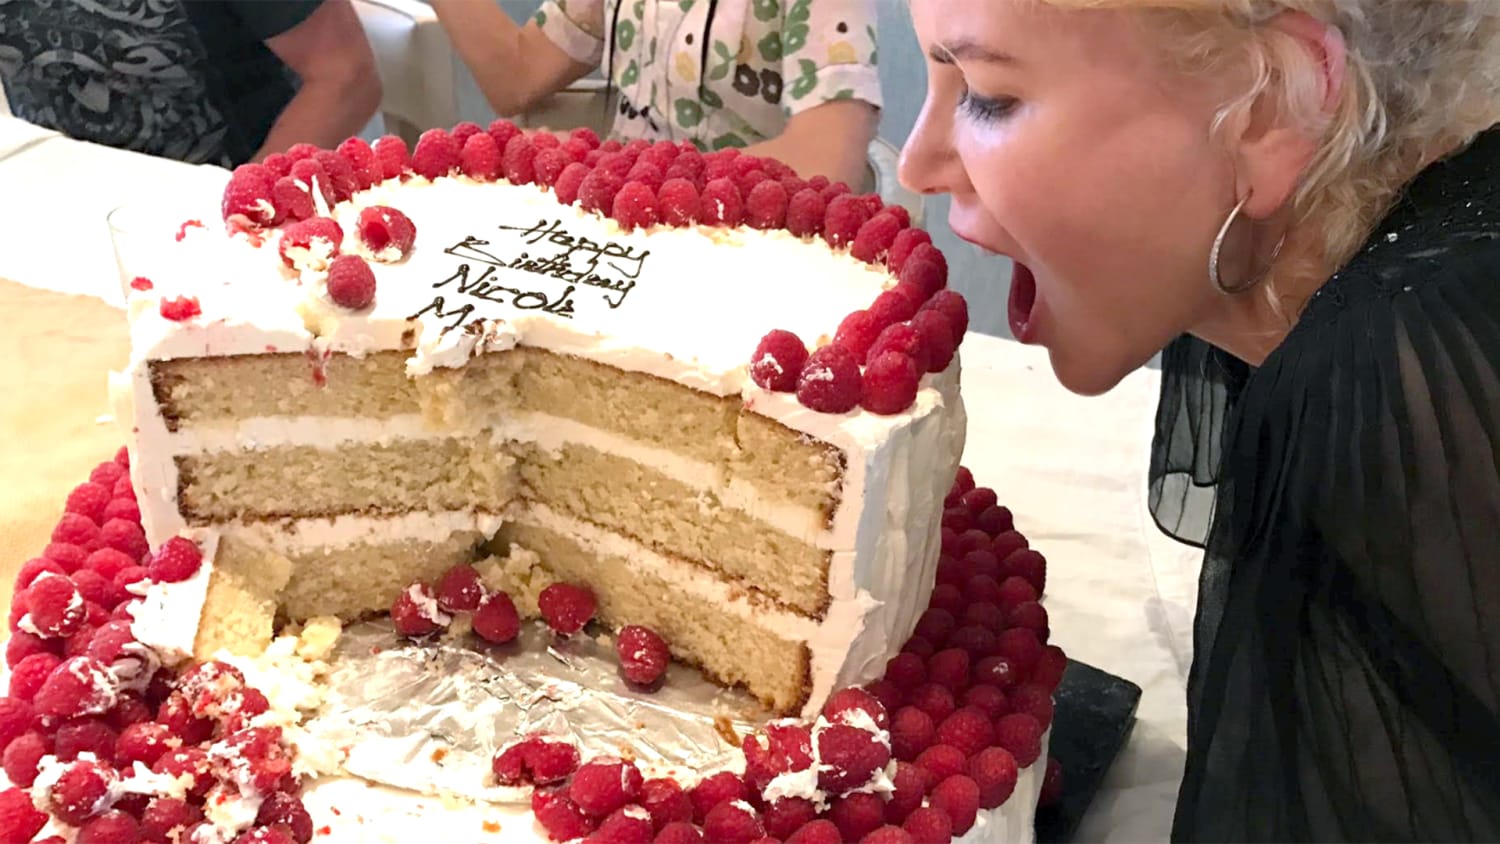 Piece of cake! Nicole Kidman shares fun photos from 50th birthday celebration